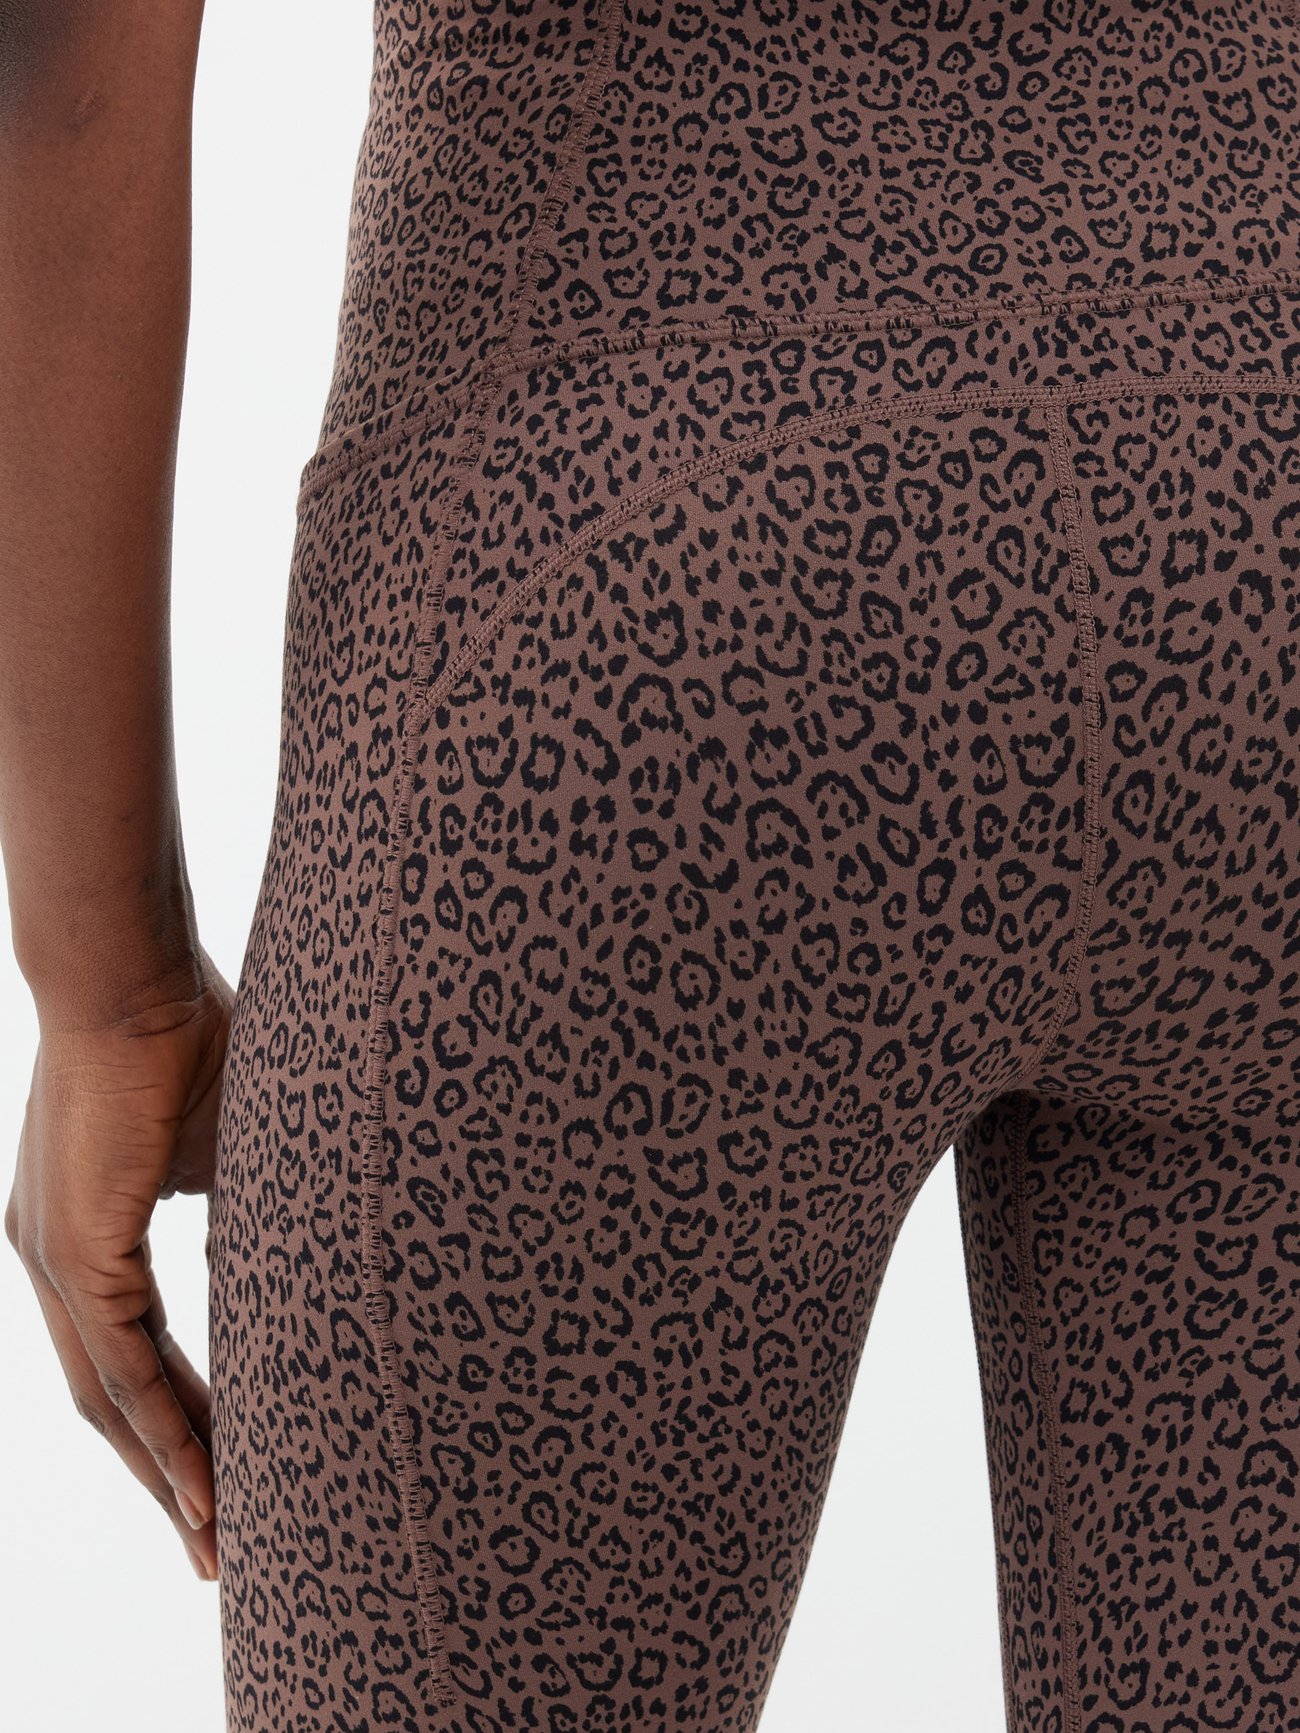 Varley Luna 7/8 Legging Classic Leopard Brown Black Animal Print